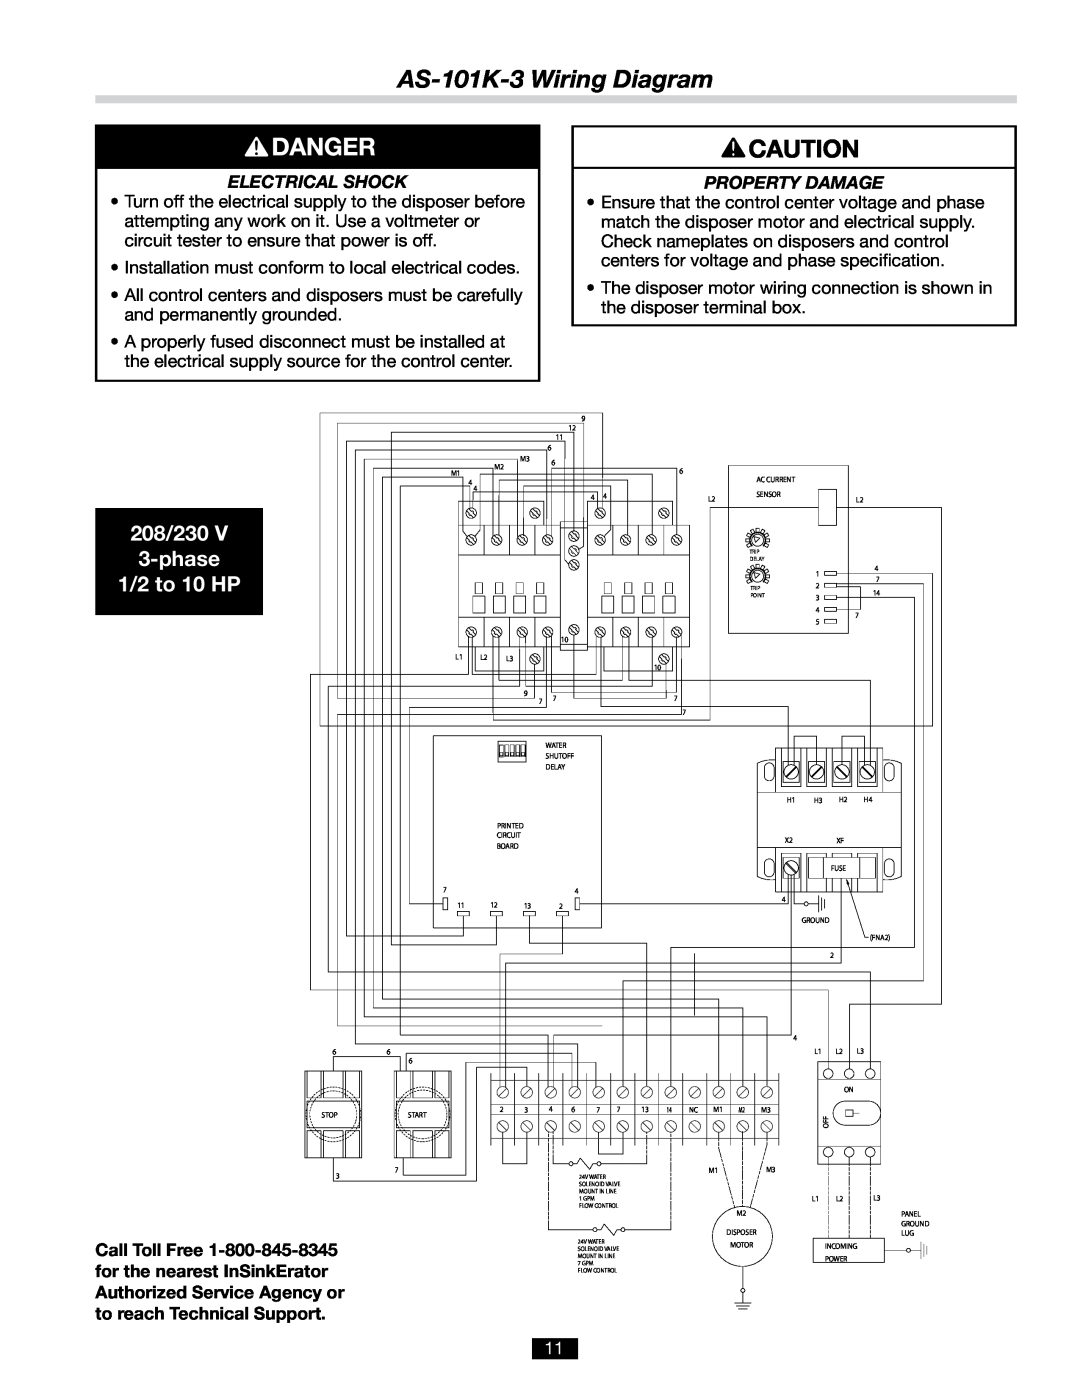 InSinkErator AS-101K-3 Wiring Diagram, 208/230 3-phase 1/2 to 10 HP, Electrical Shock, Property Damage 